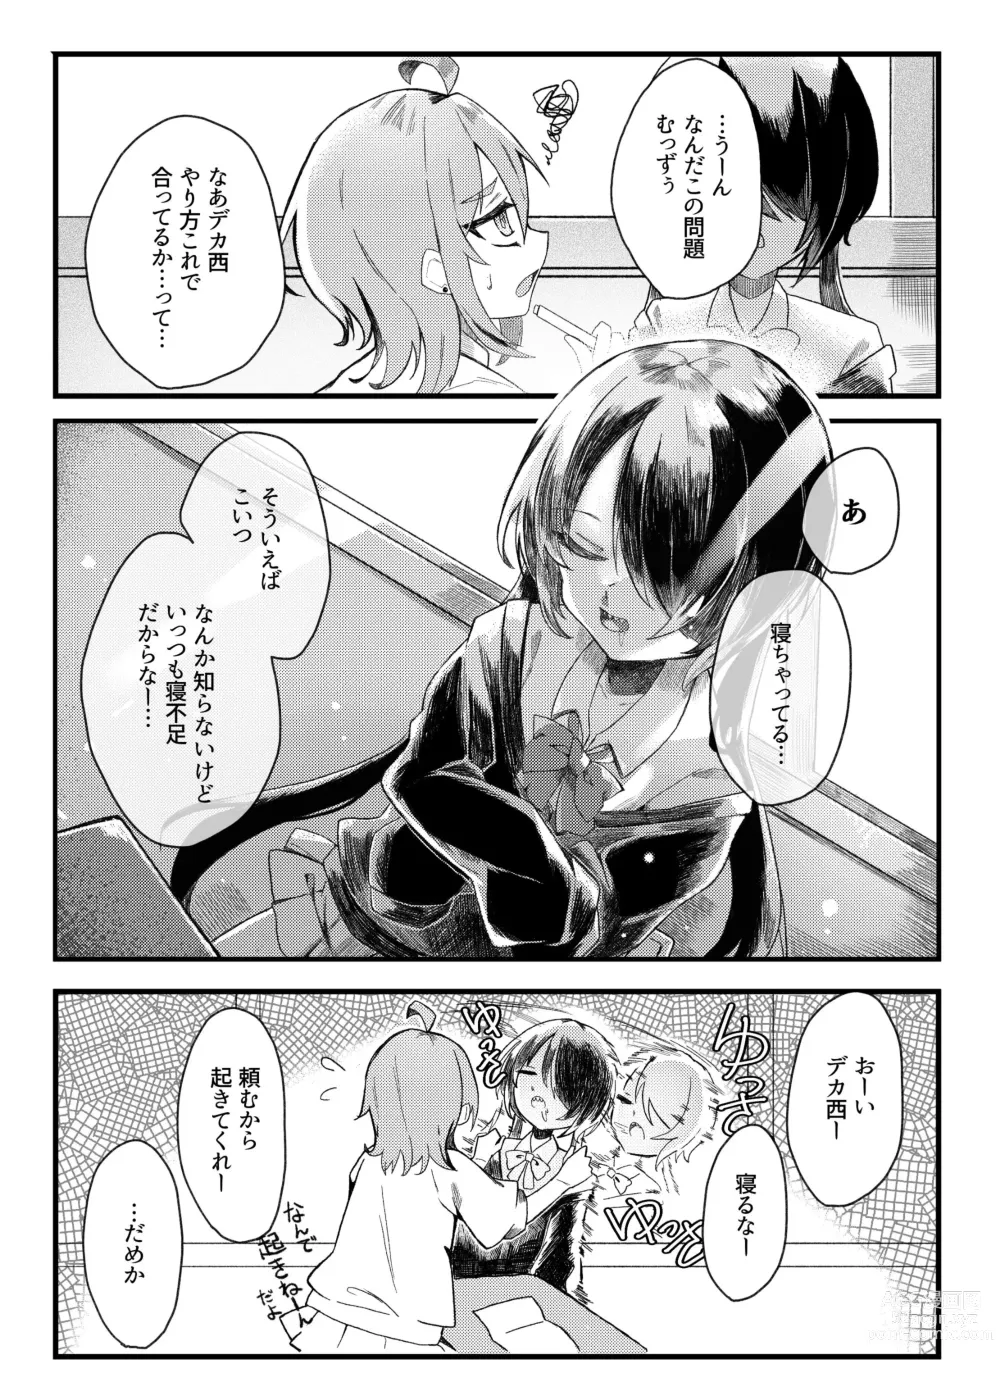 Page 4 of doujinshi Konishi to Onishi